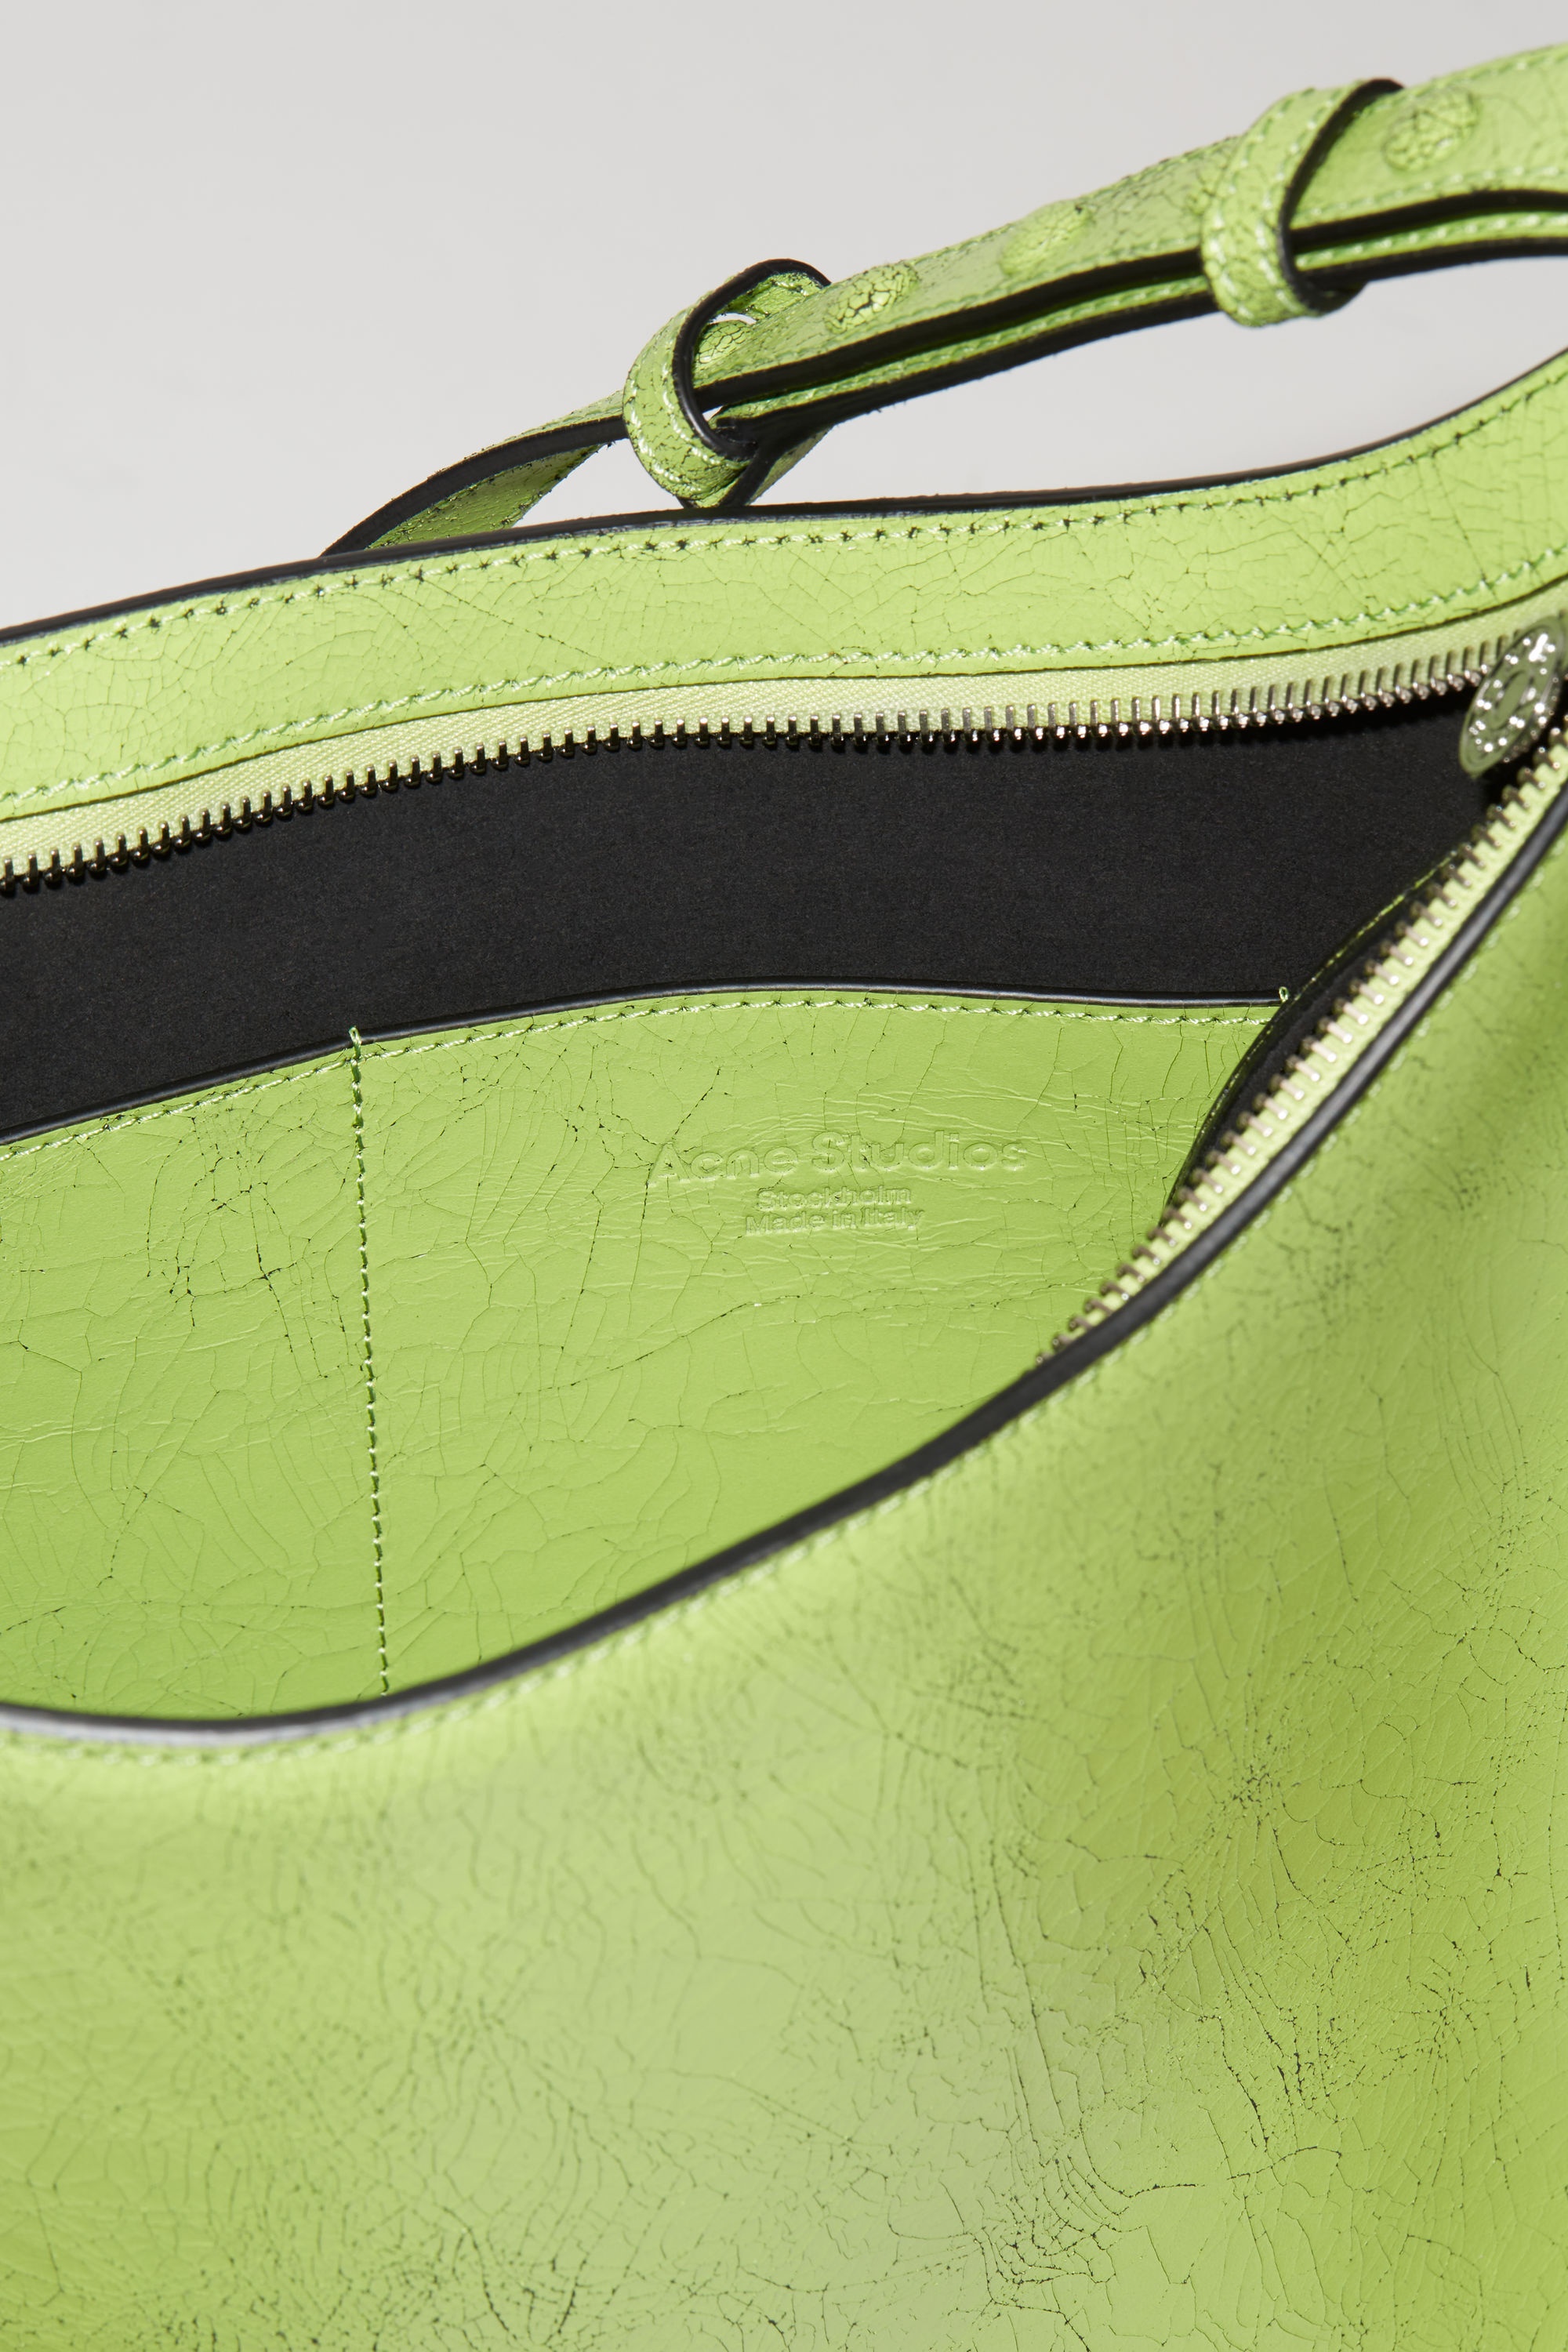 Platt shoulder bag - Lime green - 9